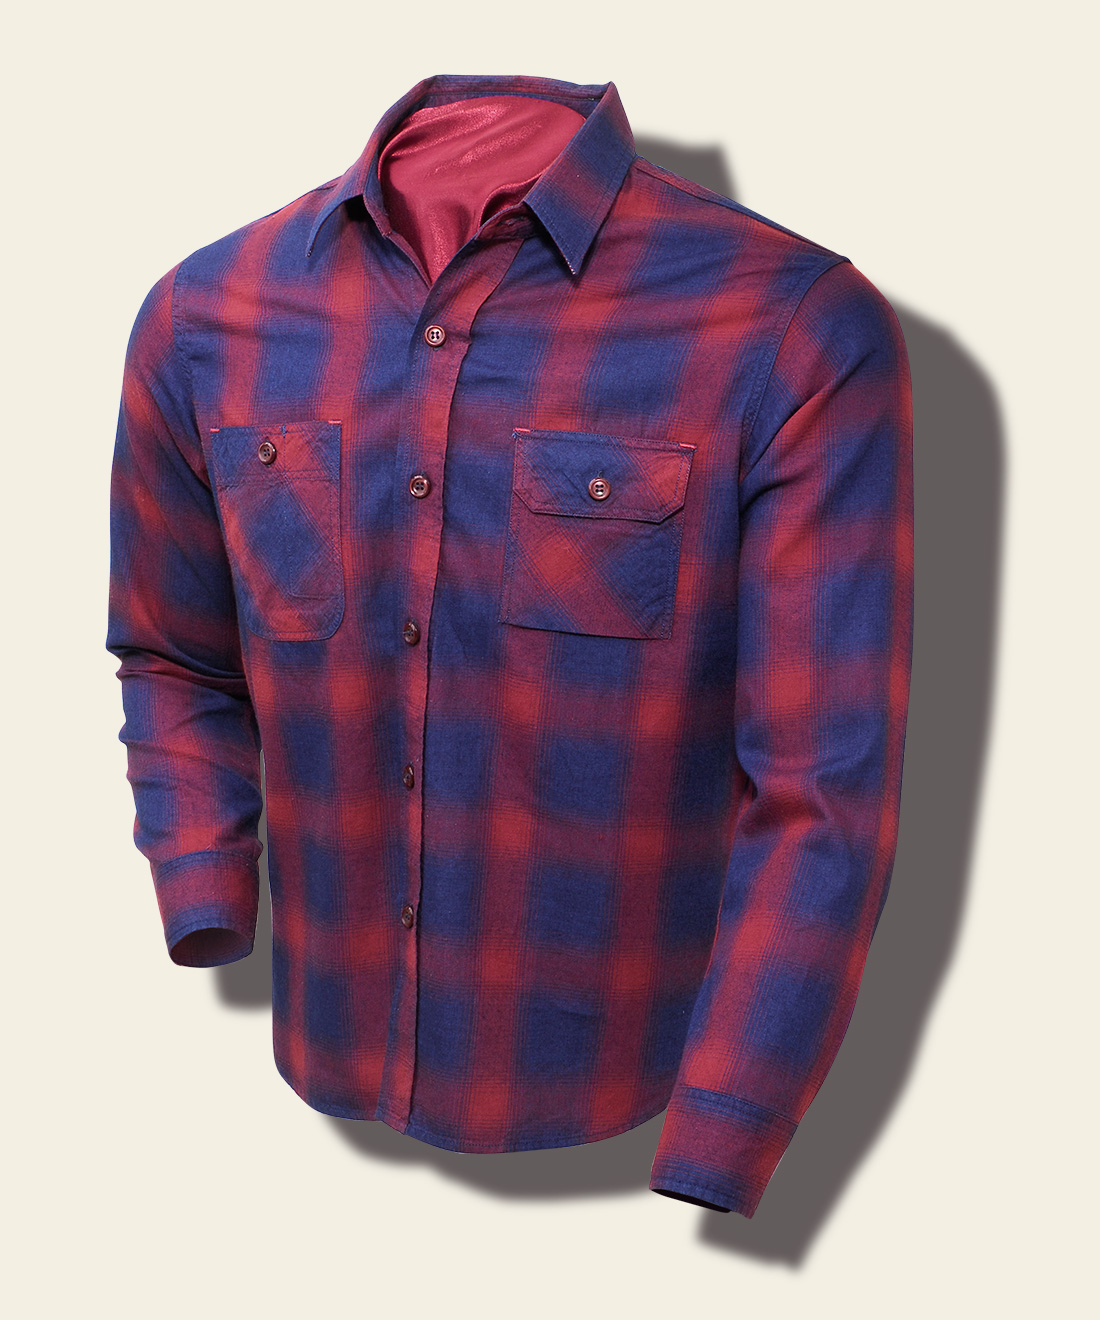 Sugar Cane Indigo-Dyed Flannel Check Shirt, Red SC27104_165 fr.jpg